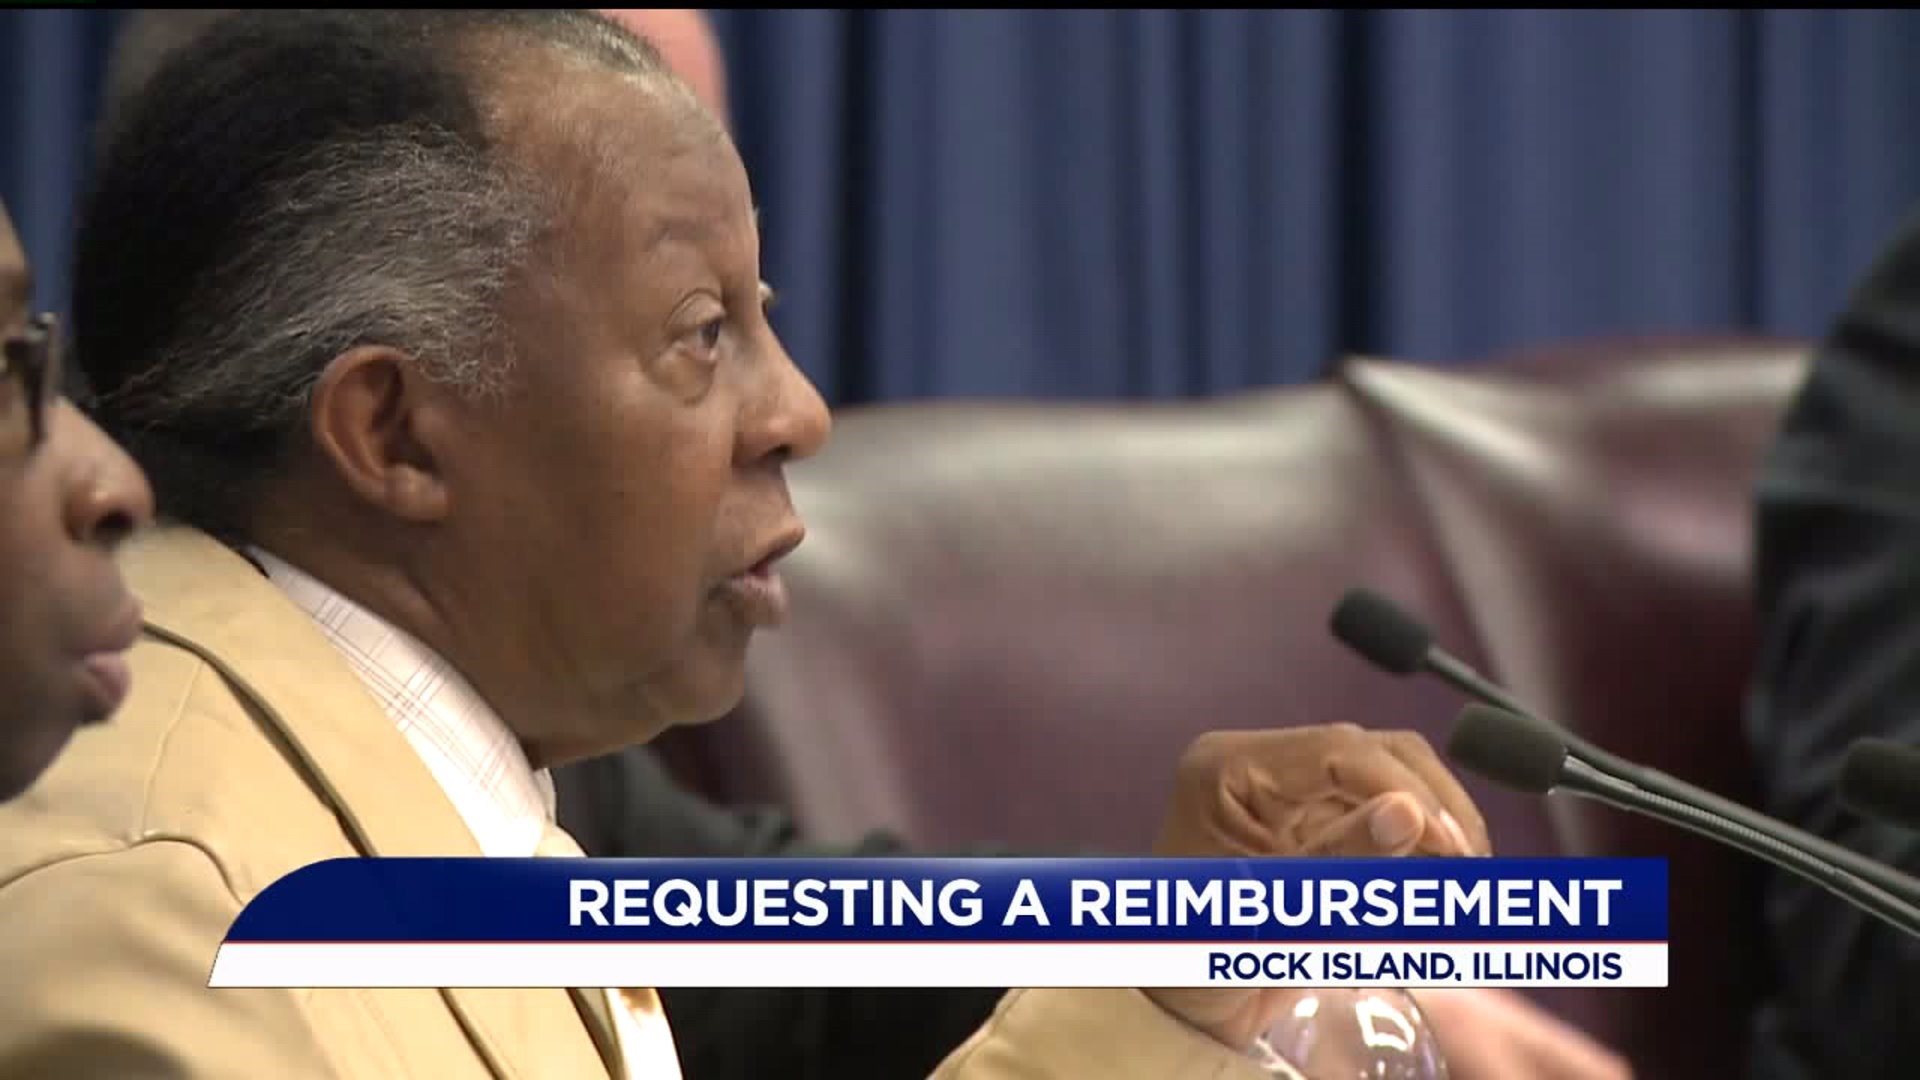 City of Rock Island asks former Alderman Mayberry to reimburse money